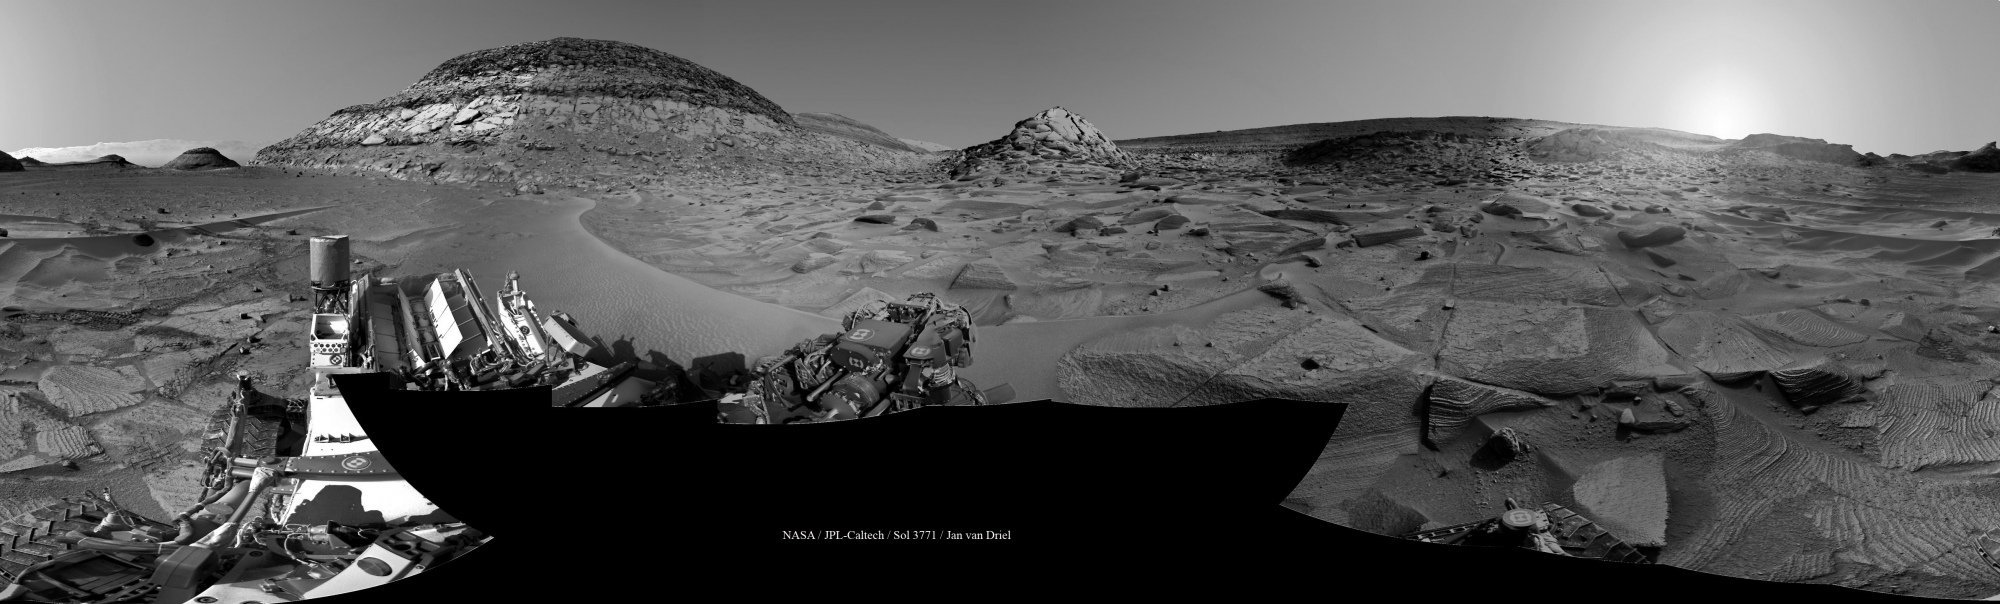 Sol 3771 (Credit NASA JPL-Caltech Jan van Driel).jpg